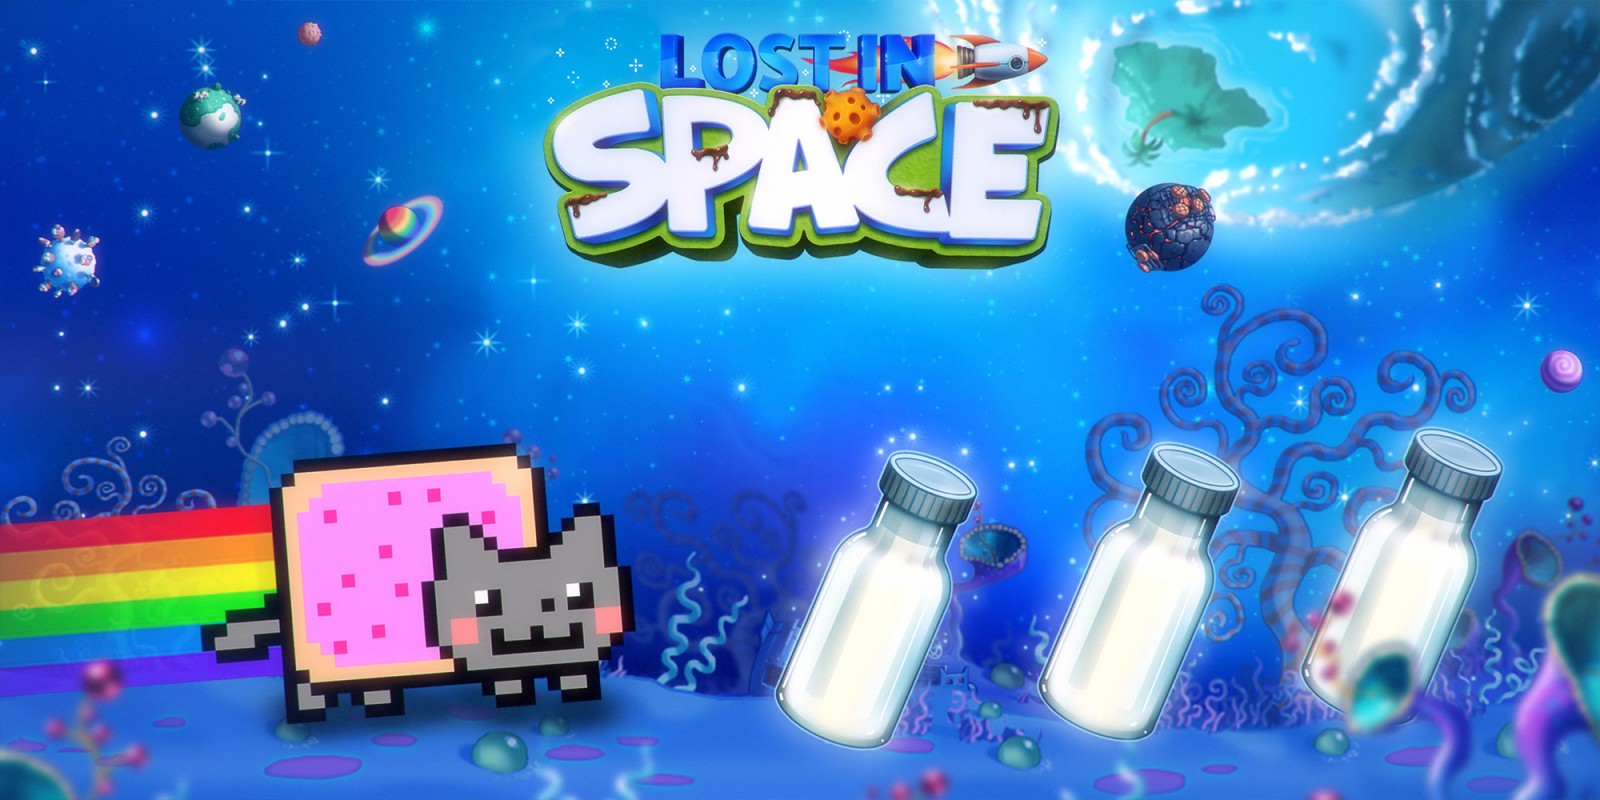 nyan cat lost in space com